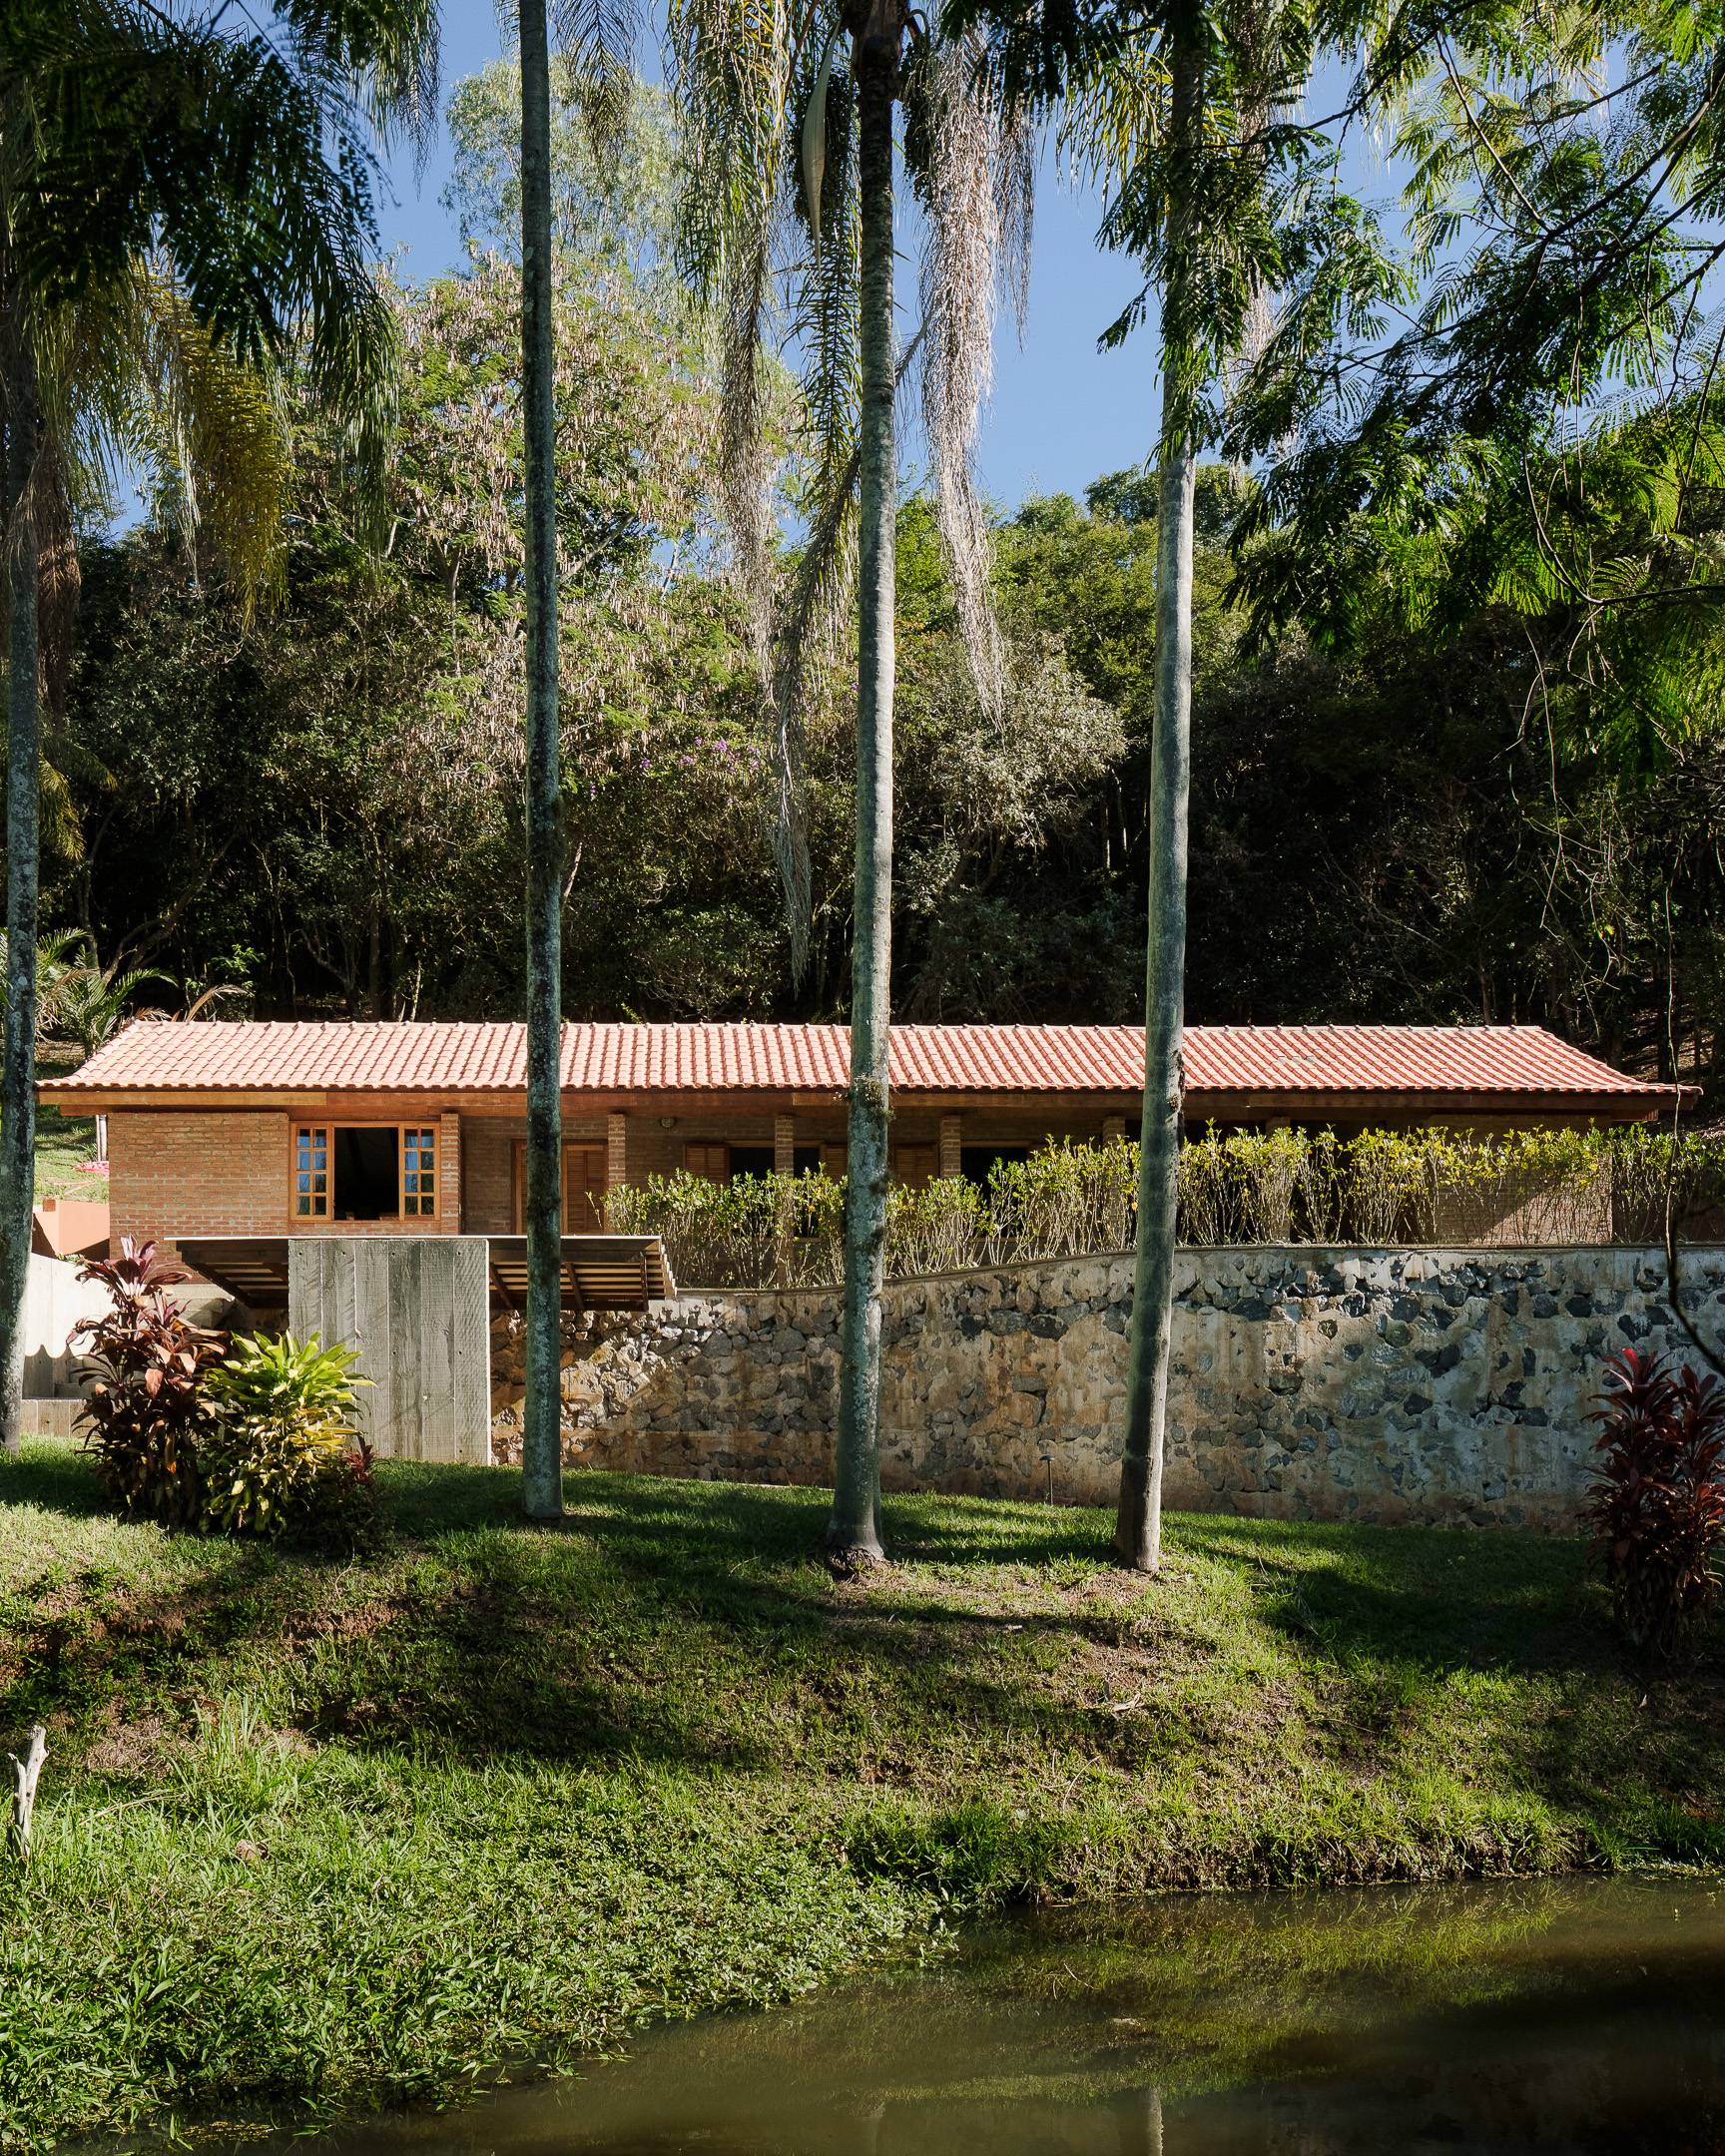 Low-slung brick-clad renovation project in Brazil